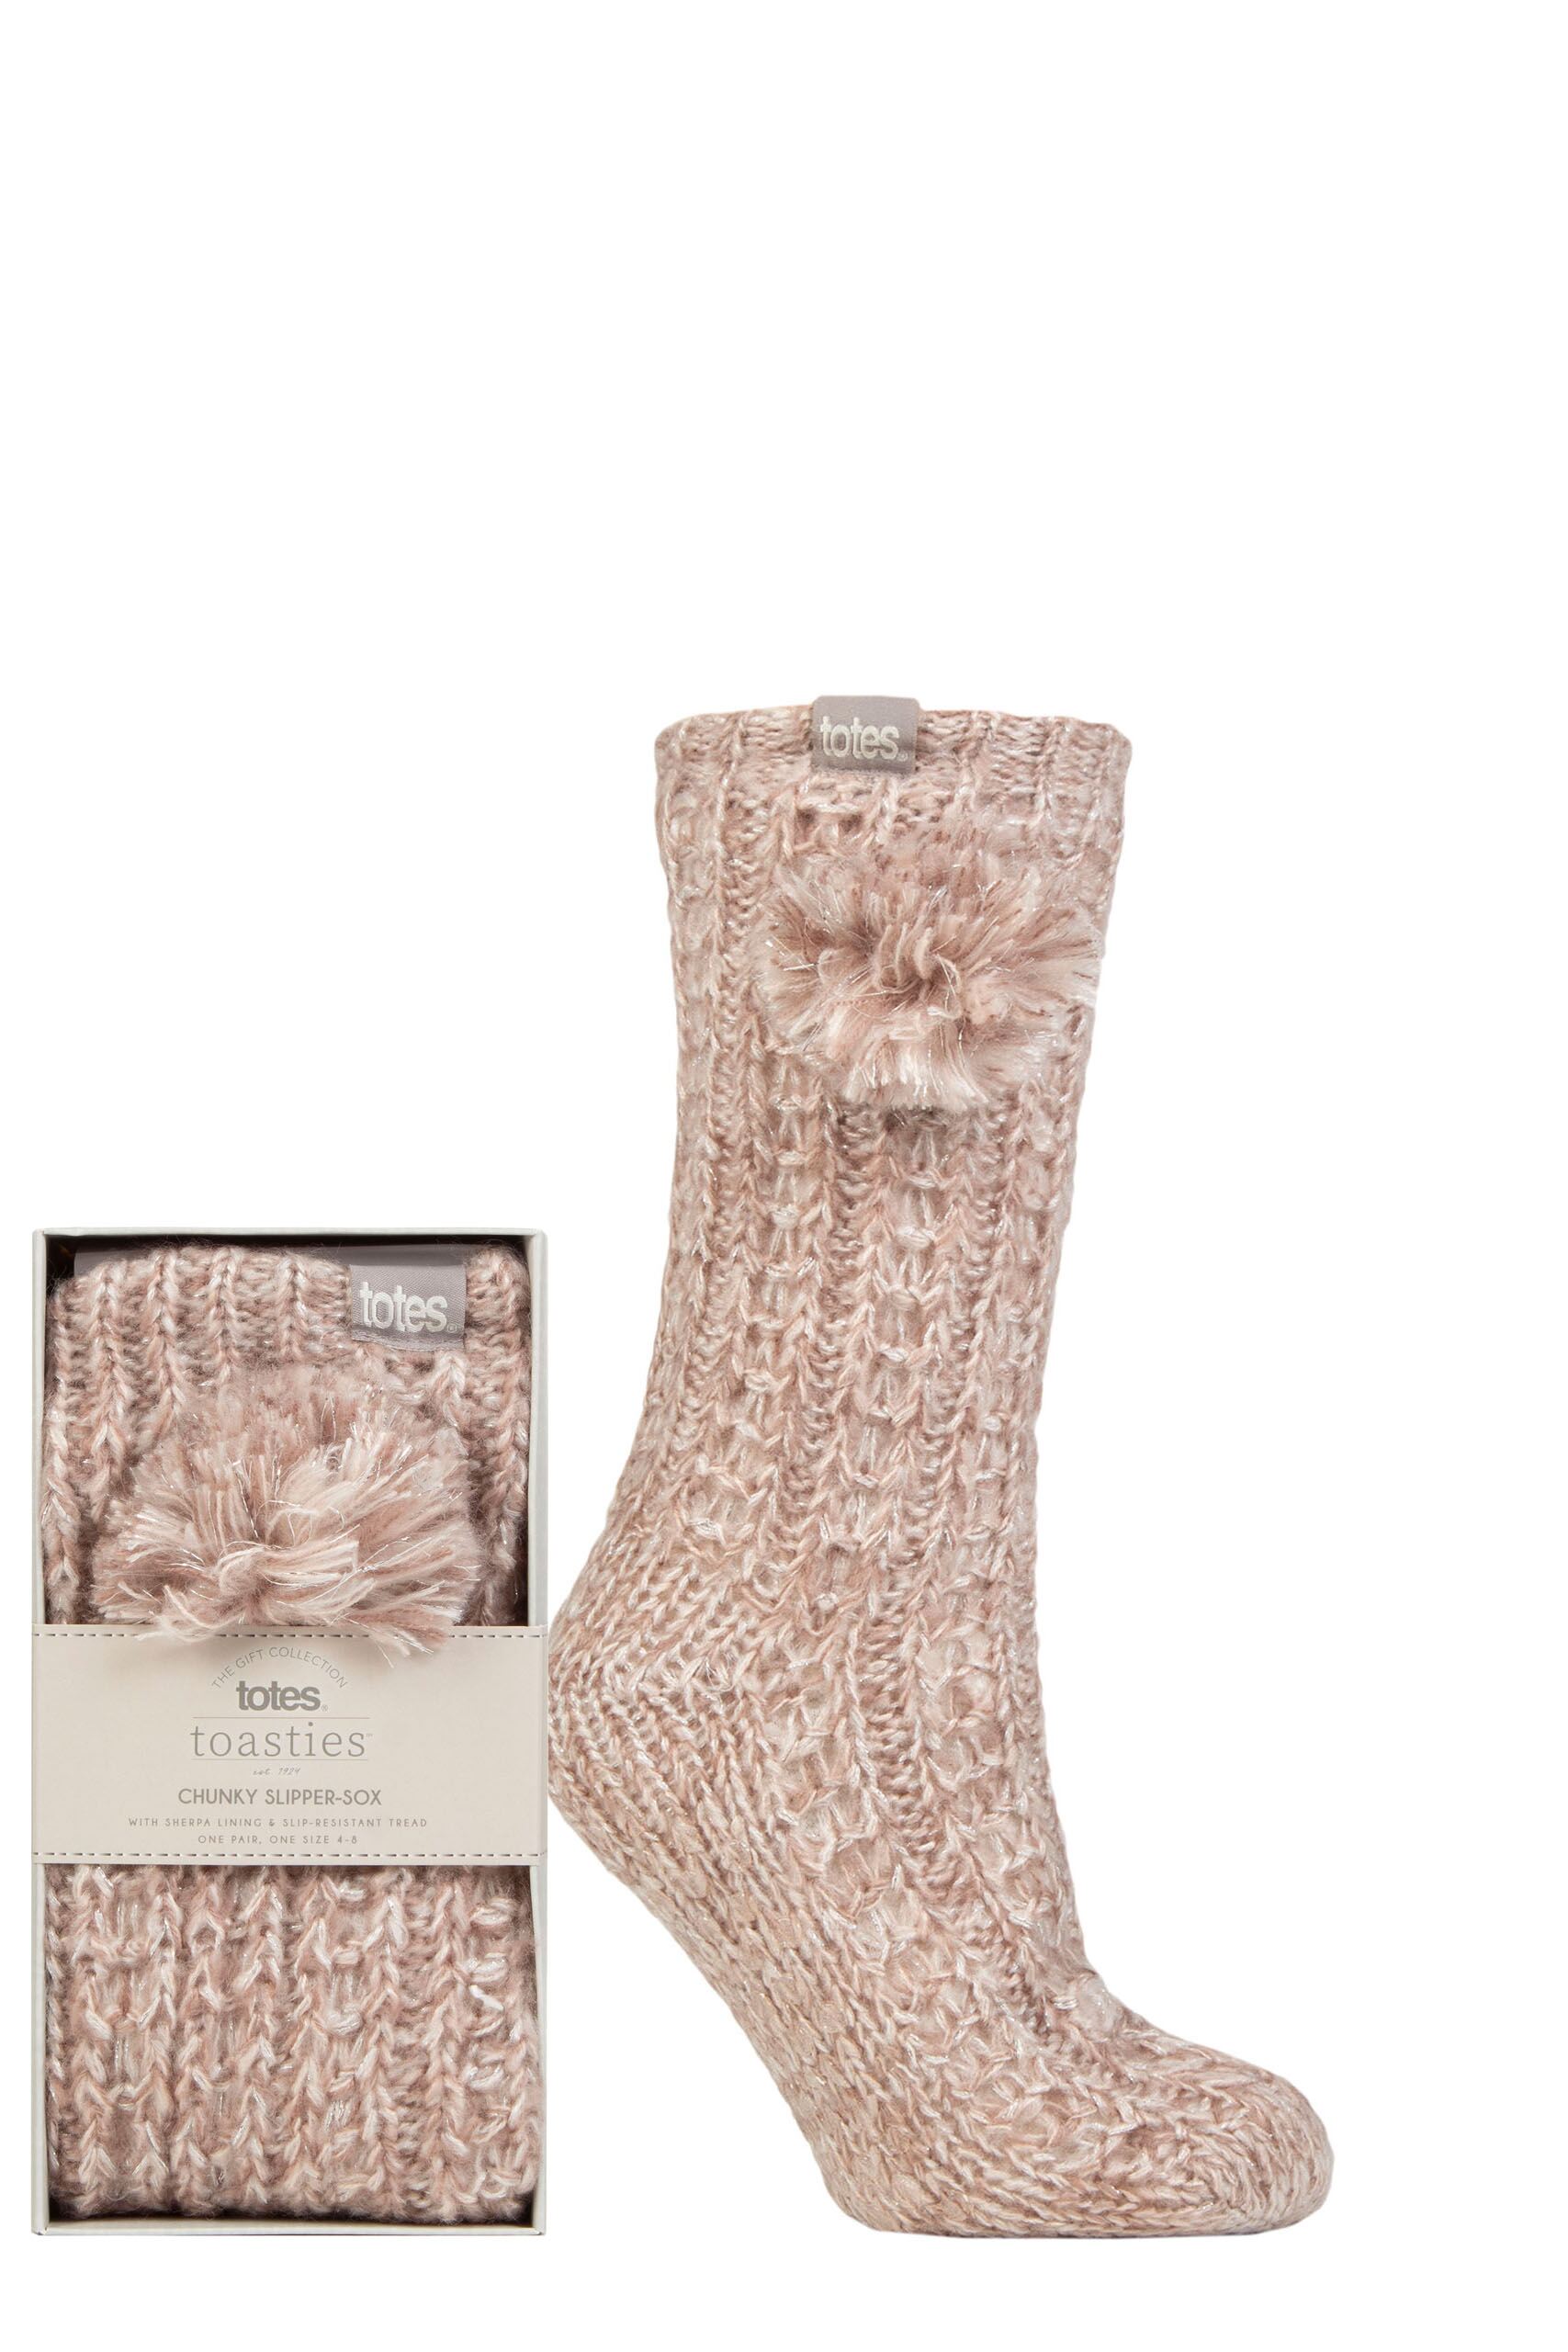 Ladies 1 Pair Totes Luxury Sparkle Slipper Socks with Pom Poms Pink 4-8 Ladies